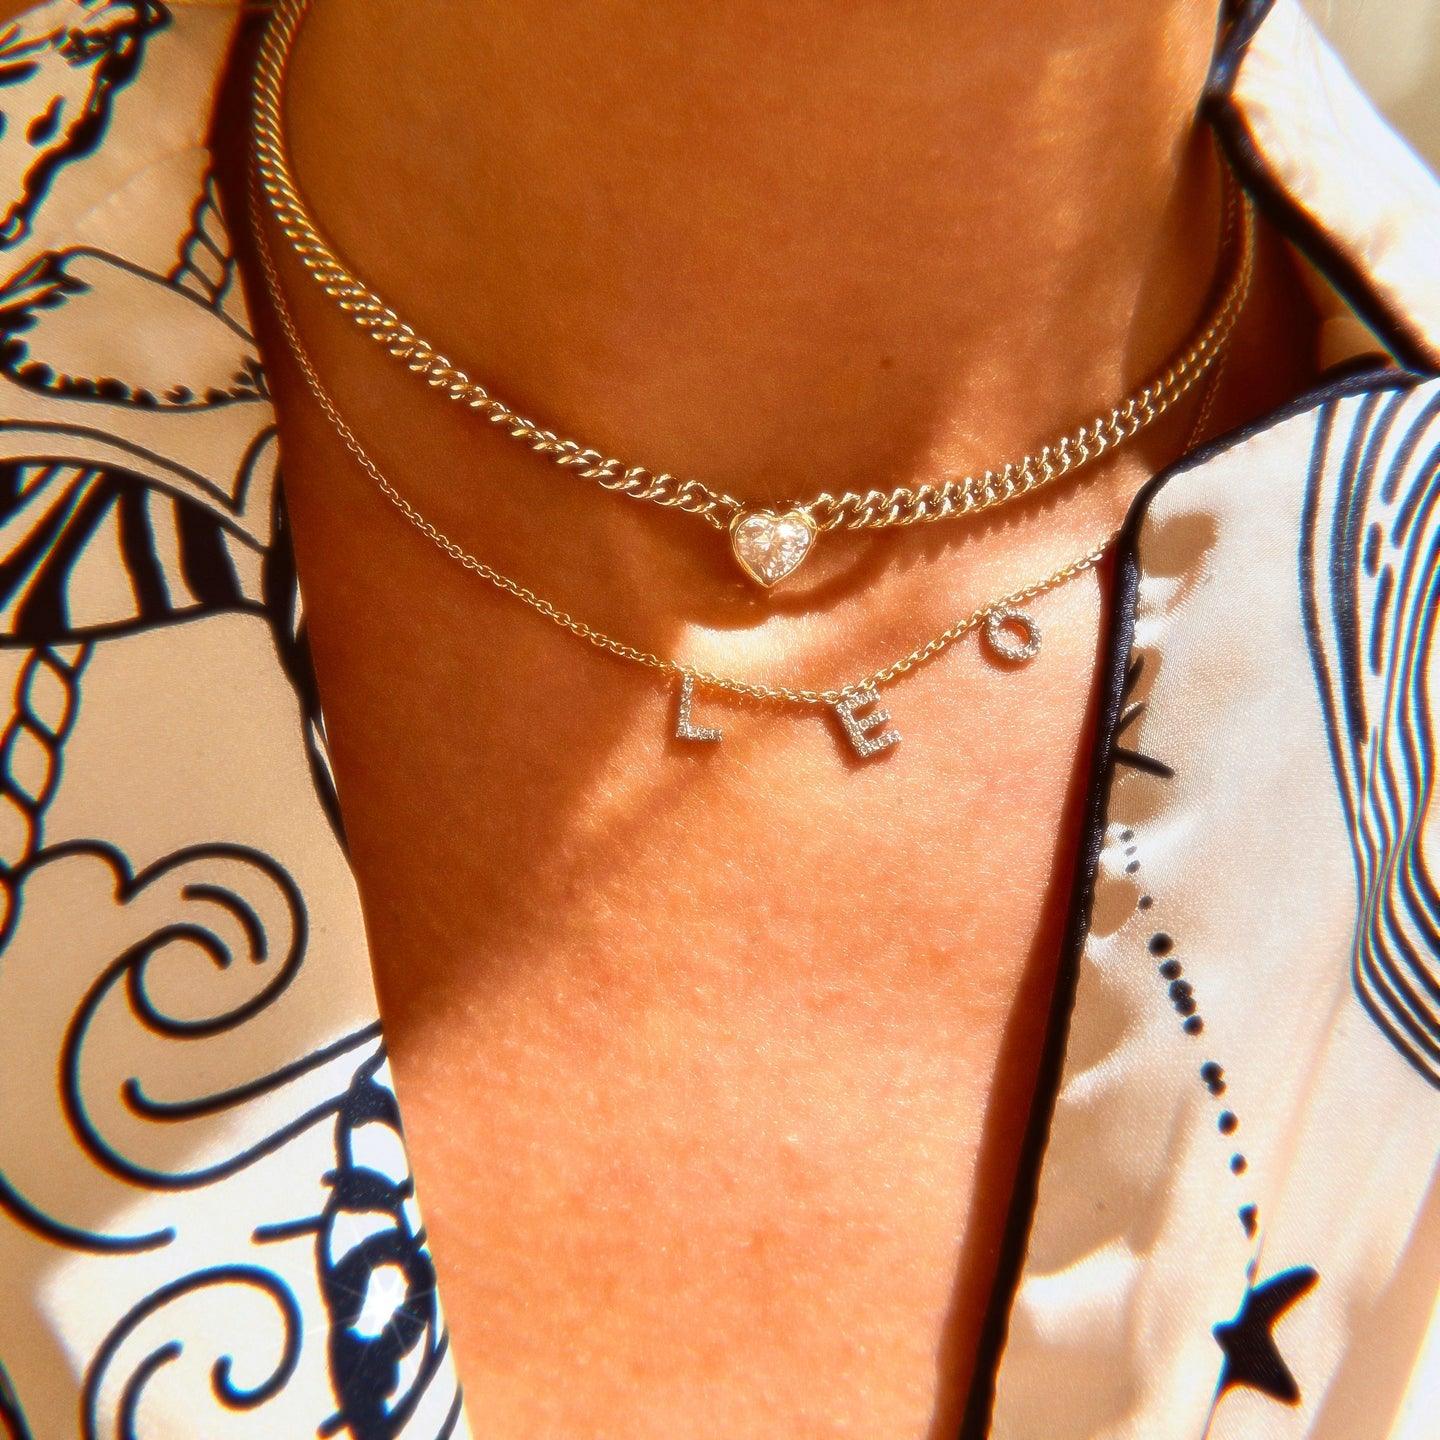 Heavenly Necklaces - A LA FOLIE Necklace in Silver - OutDazl